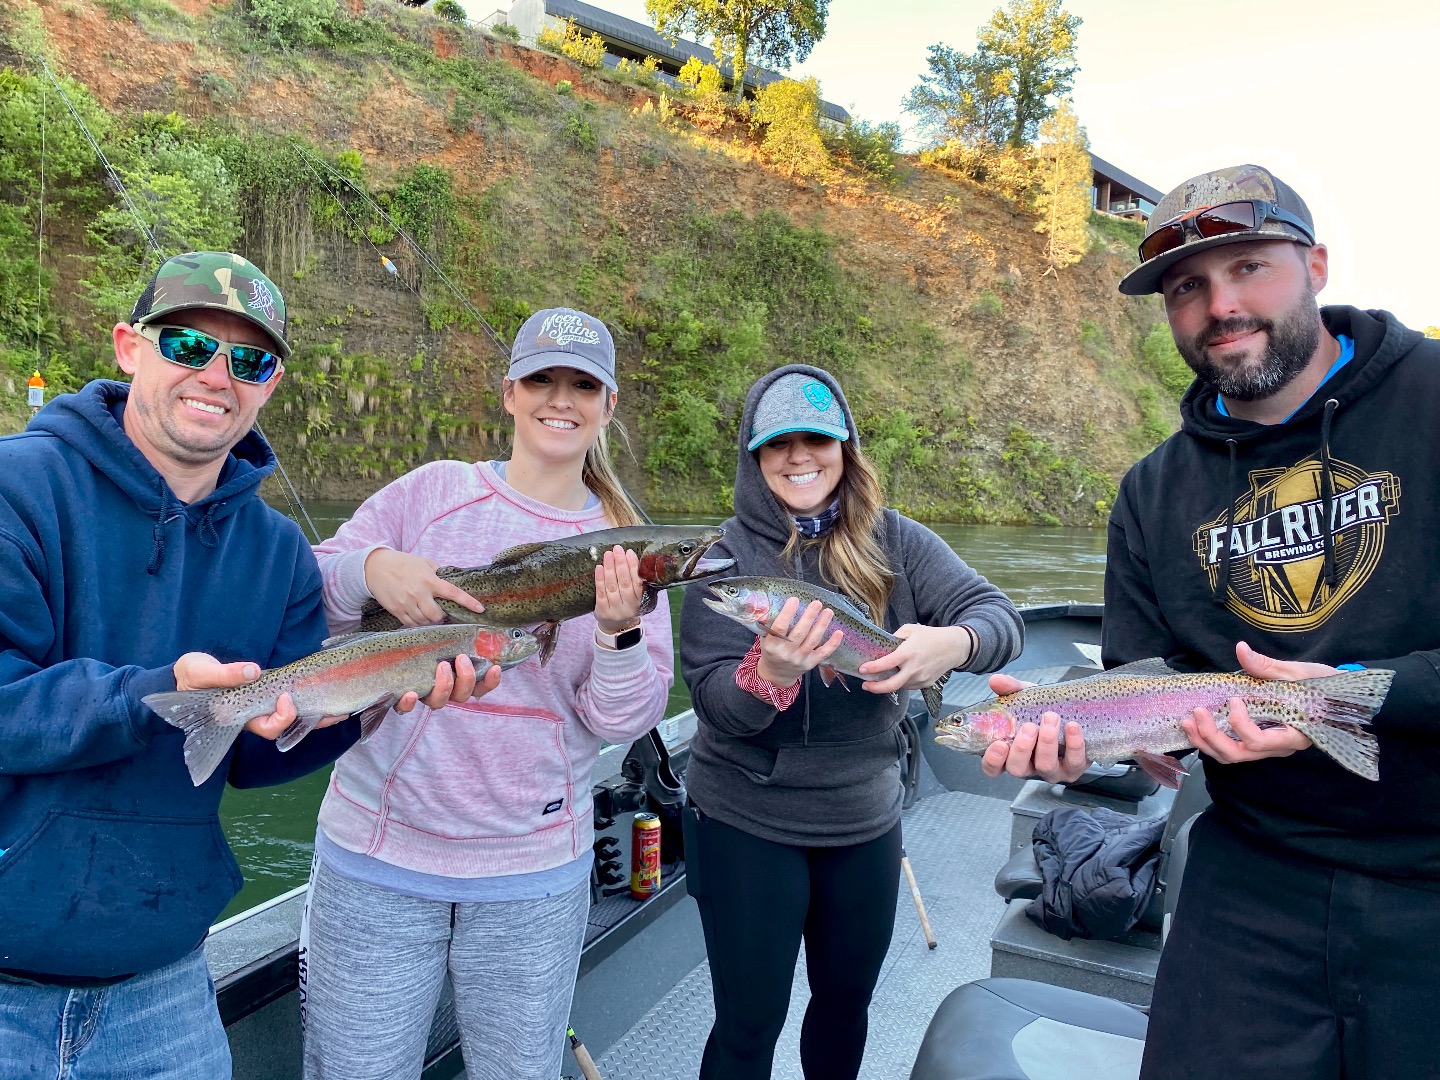 Hot bite fishing for Sac River rainbows!